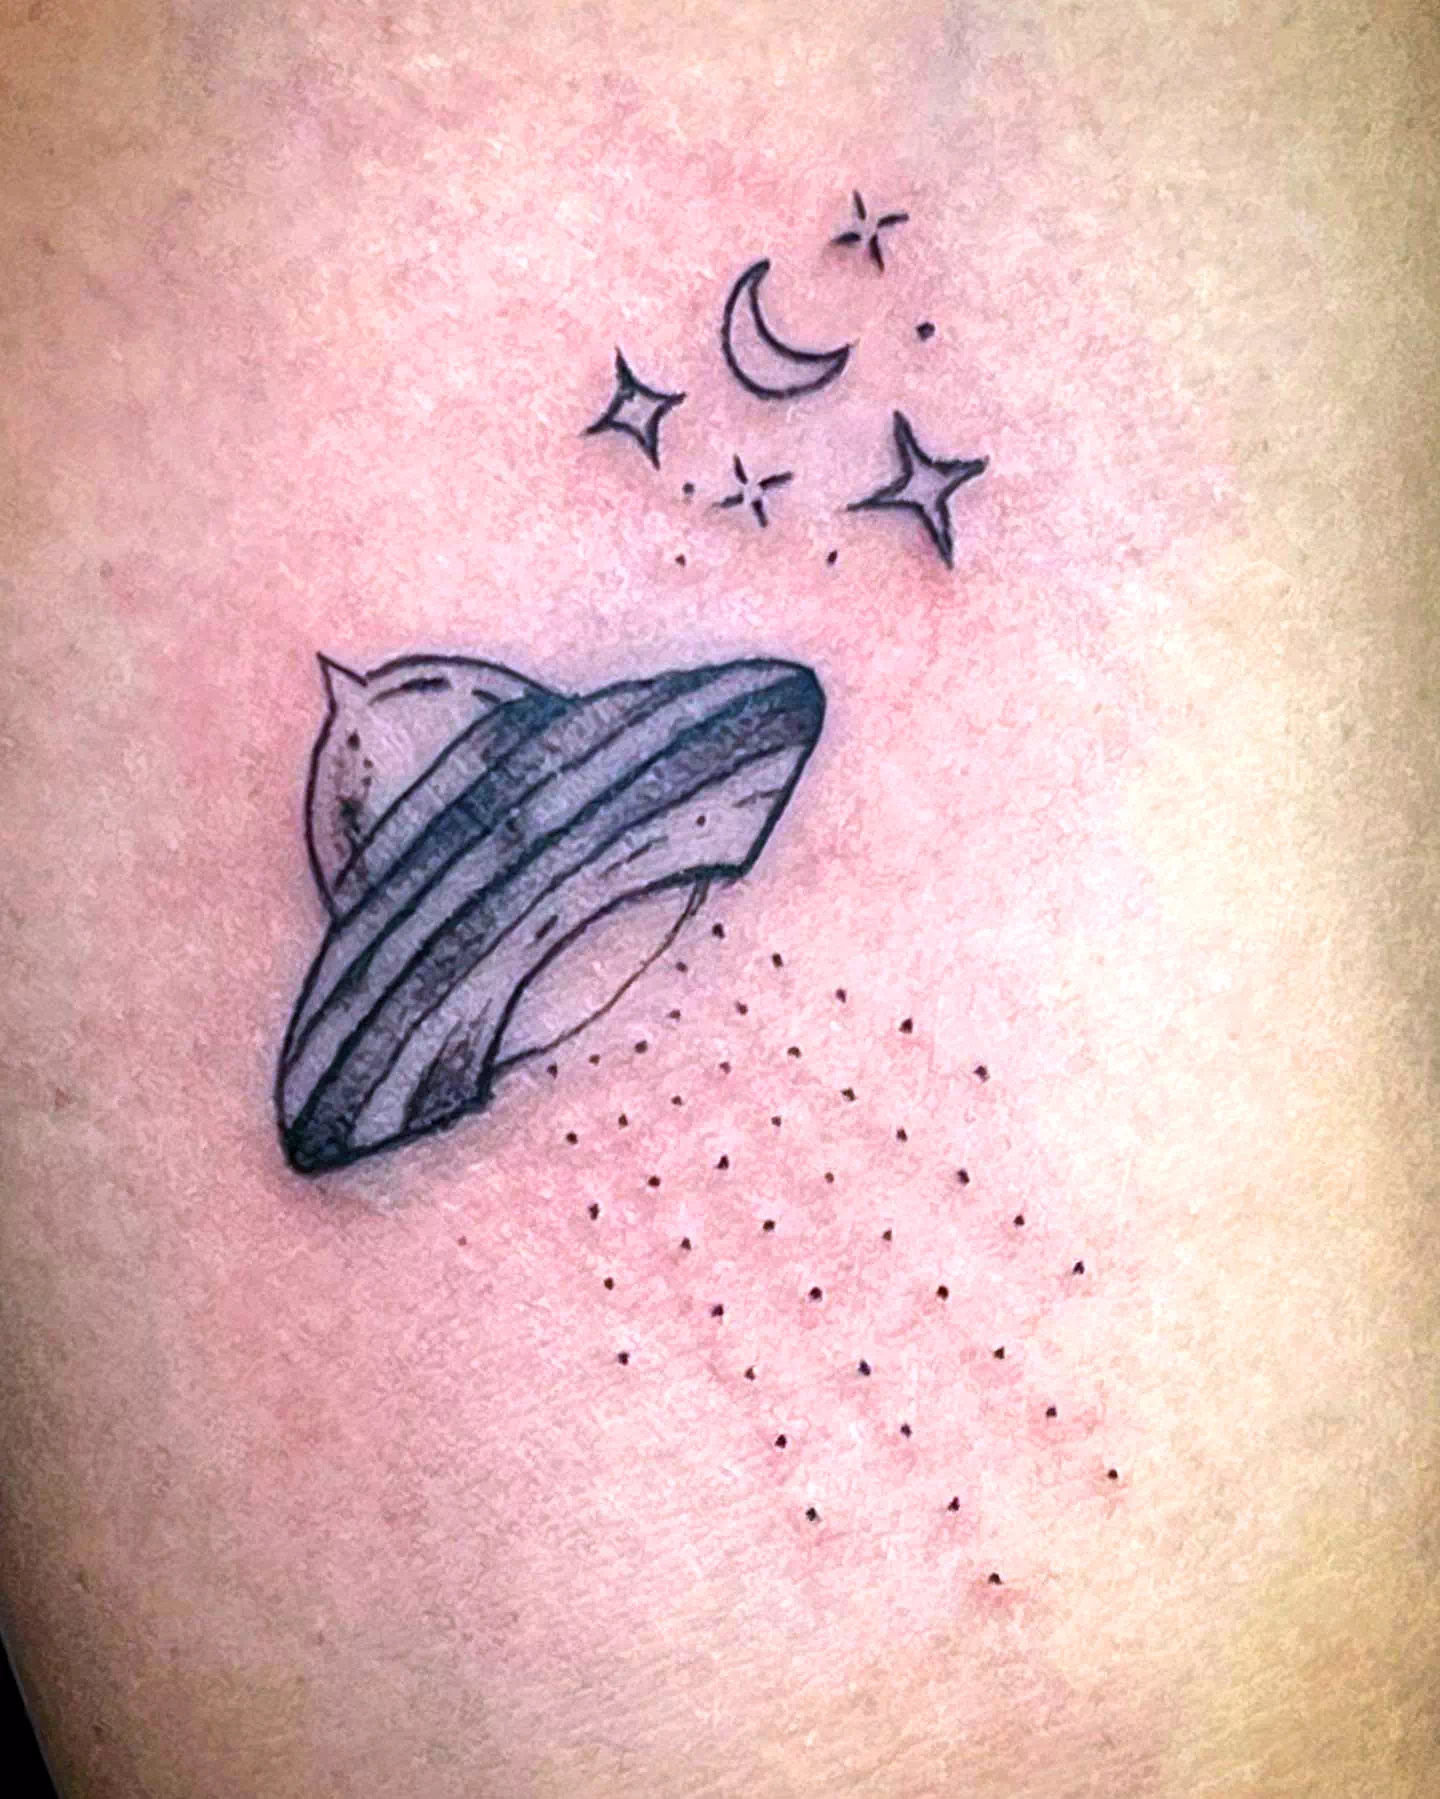 Tatuaje simple de una nave espacial 1